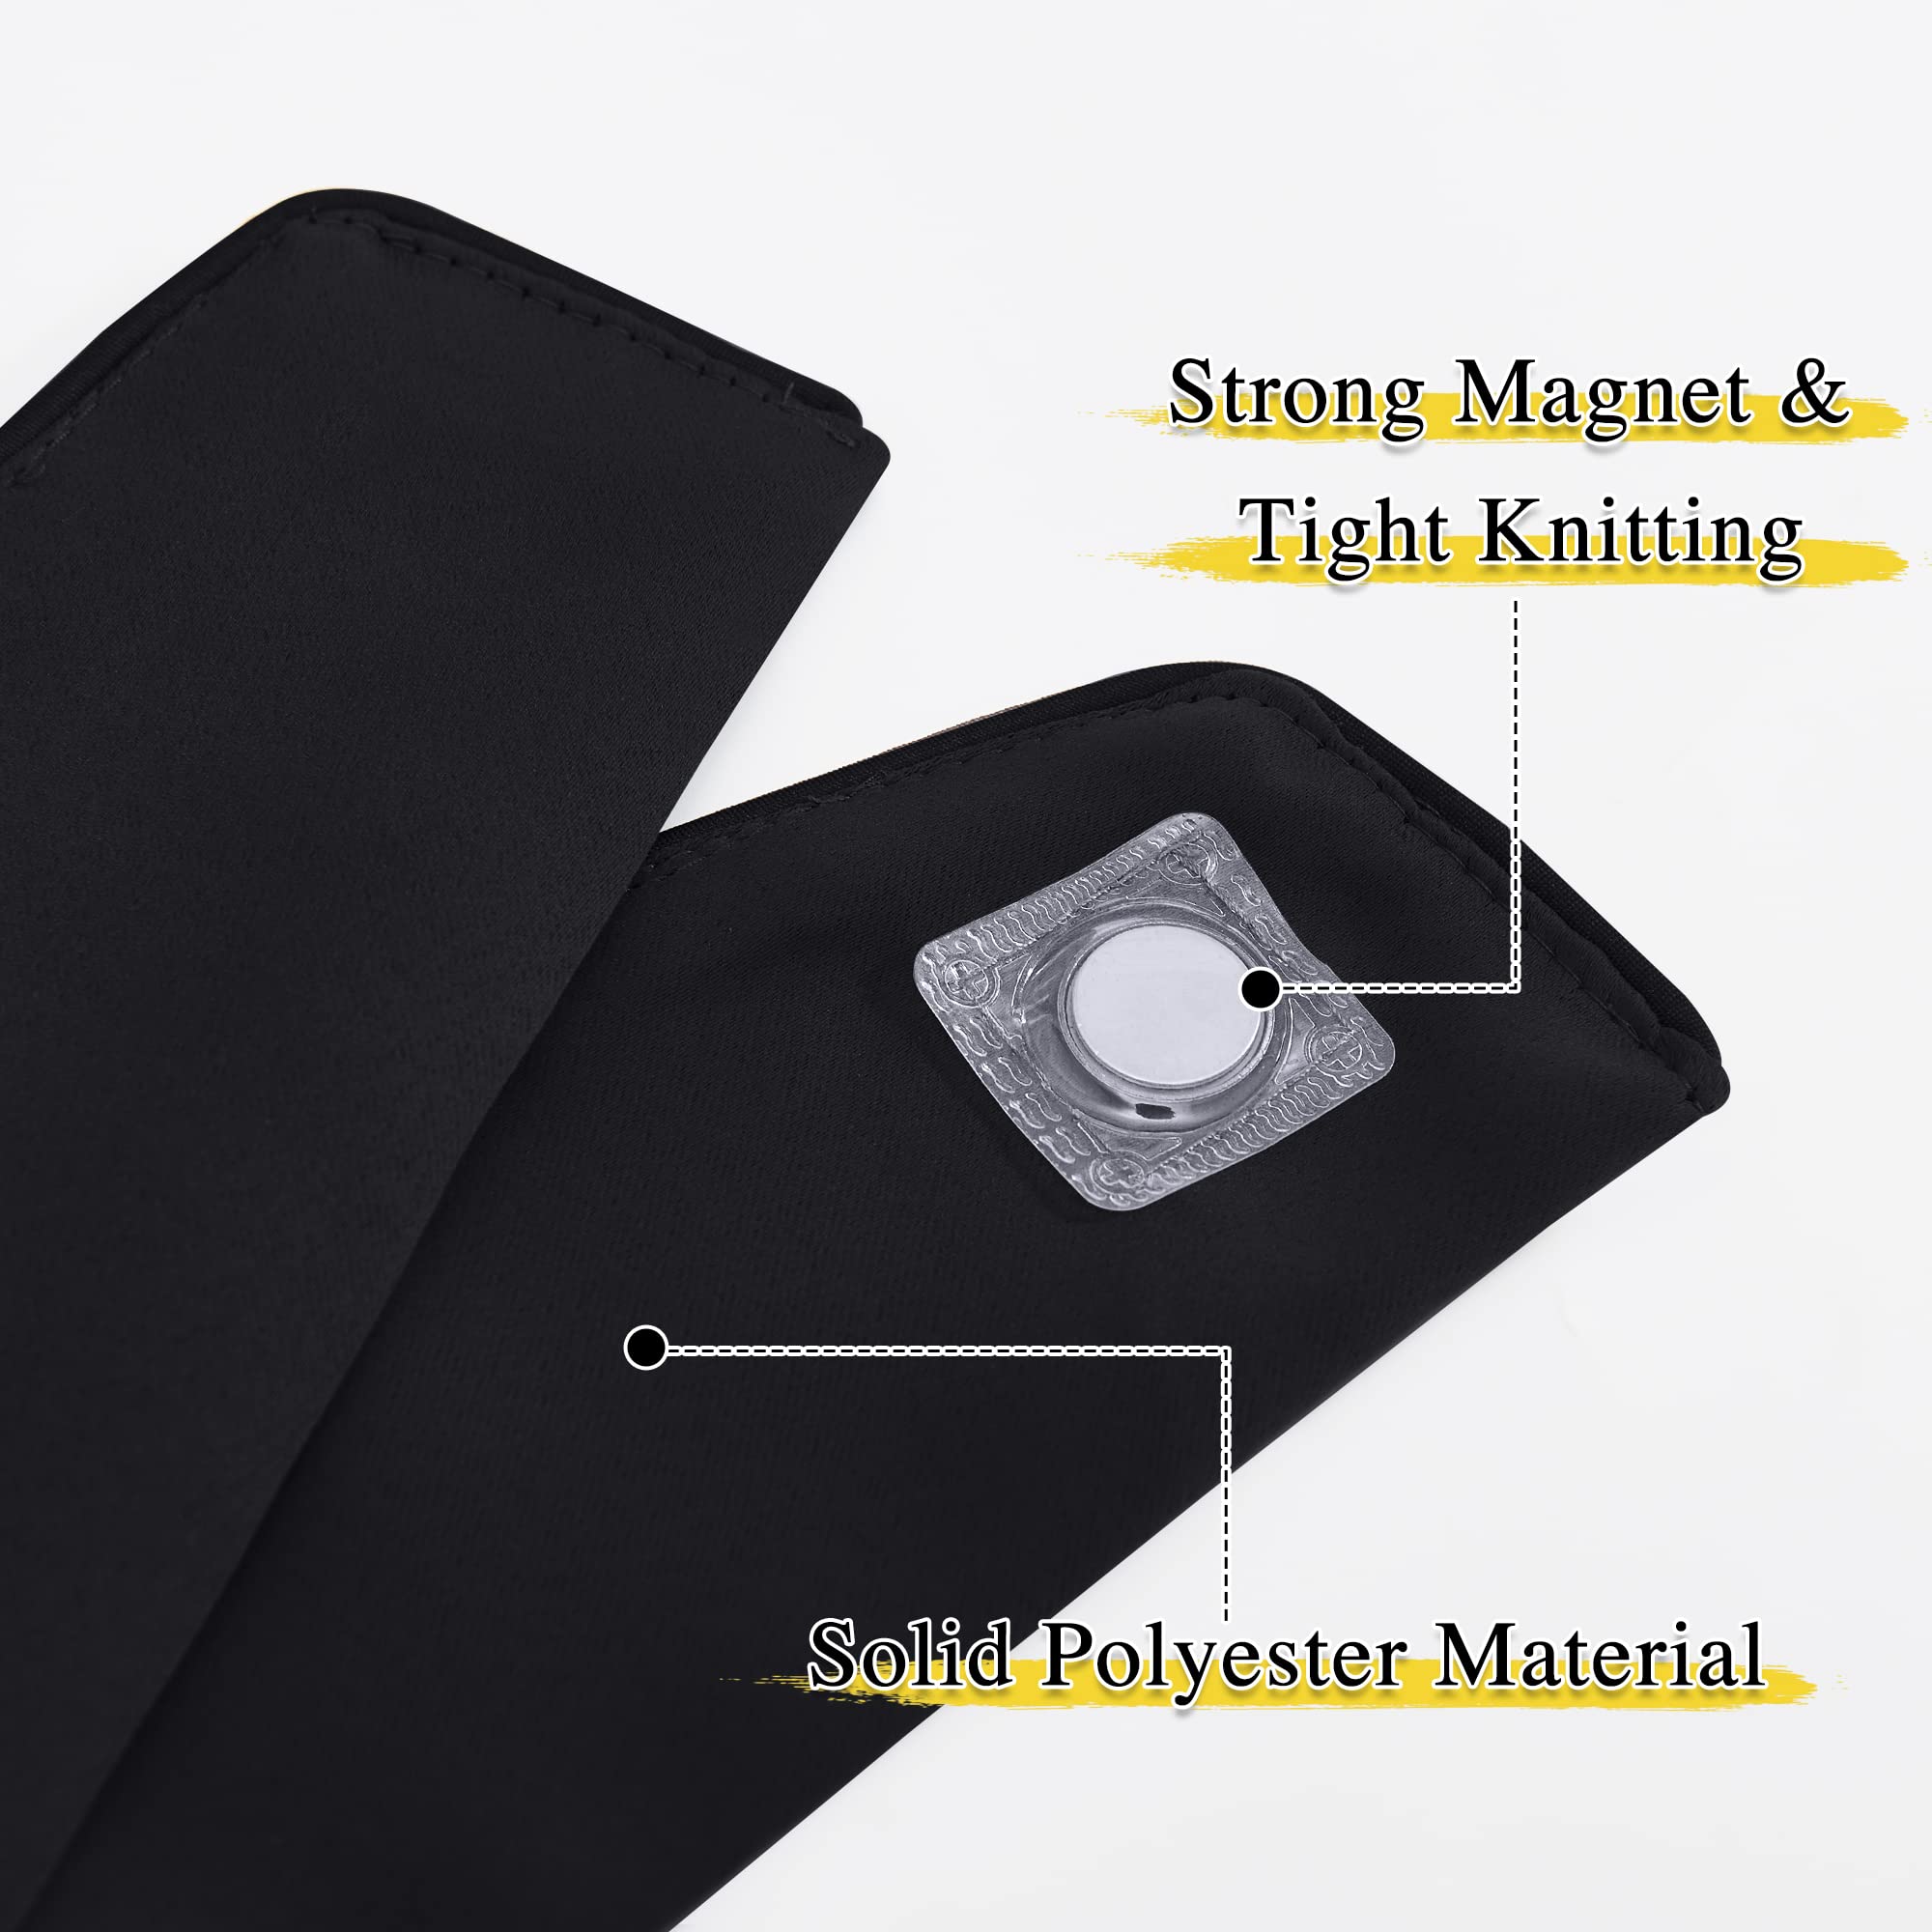 4PCS Magnetic Decorative Drape Tie Backs